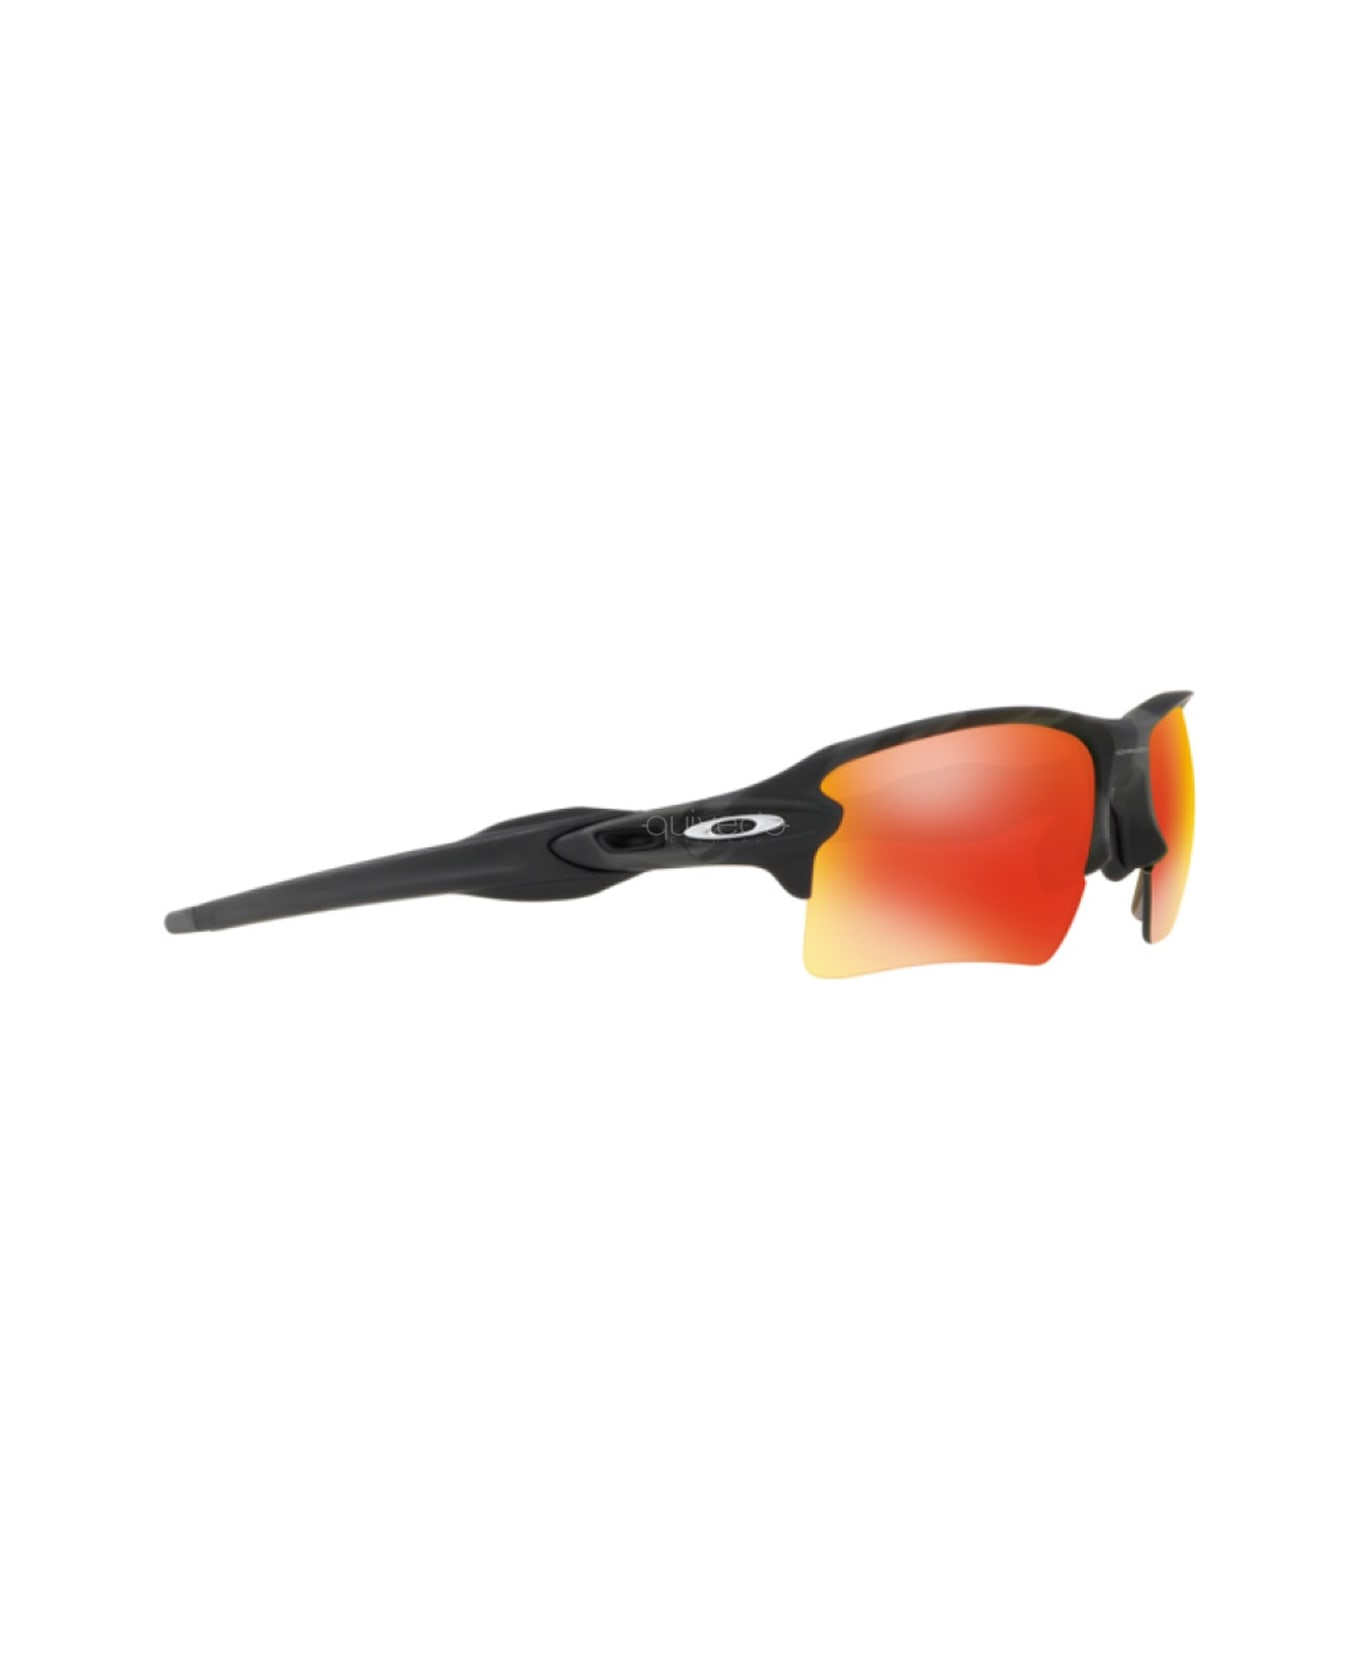 Oakley 9188 Sole Sunglasses - Nero サングラス